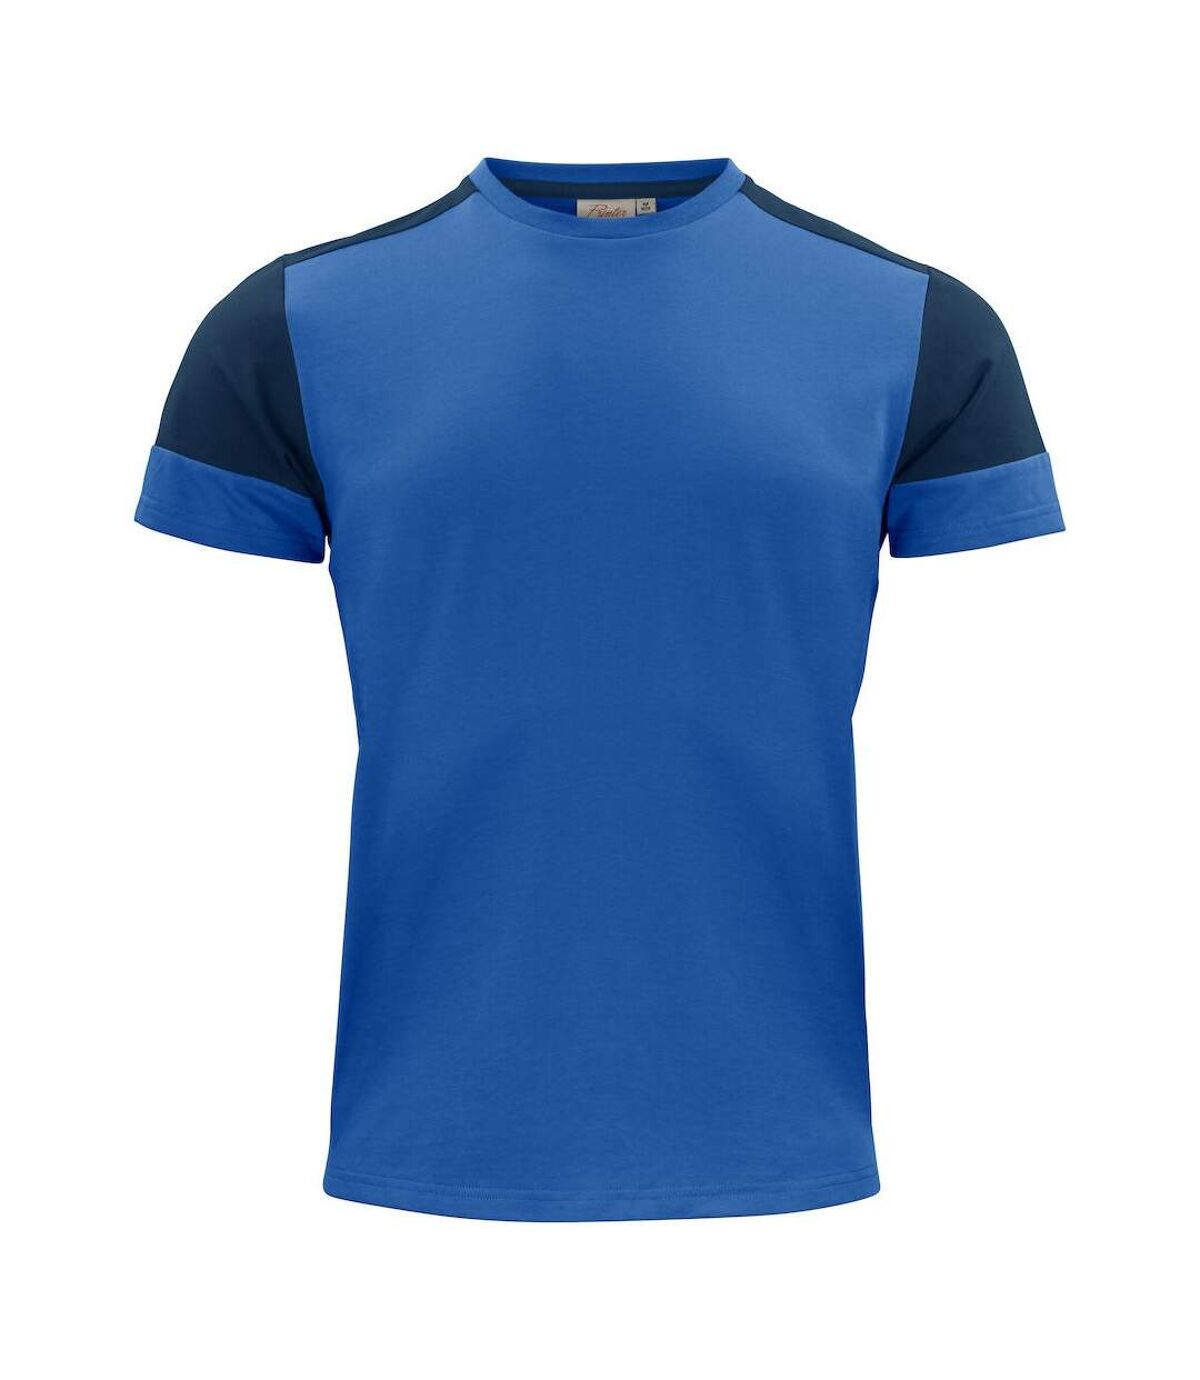 Printer - T-shirt PRIME - Homme (Bleu cobalt / Bleu marine) - UTUB419